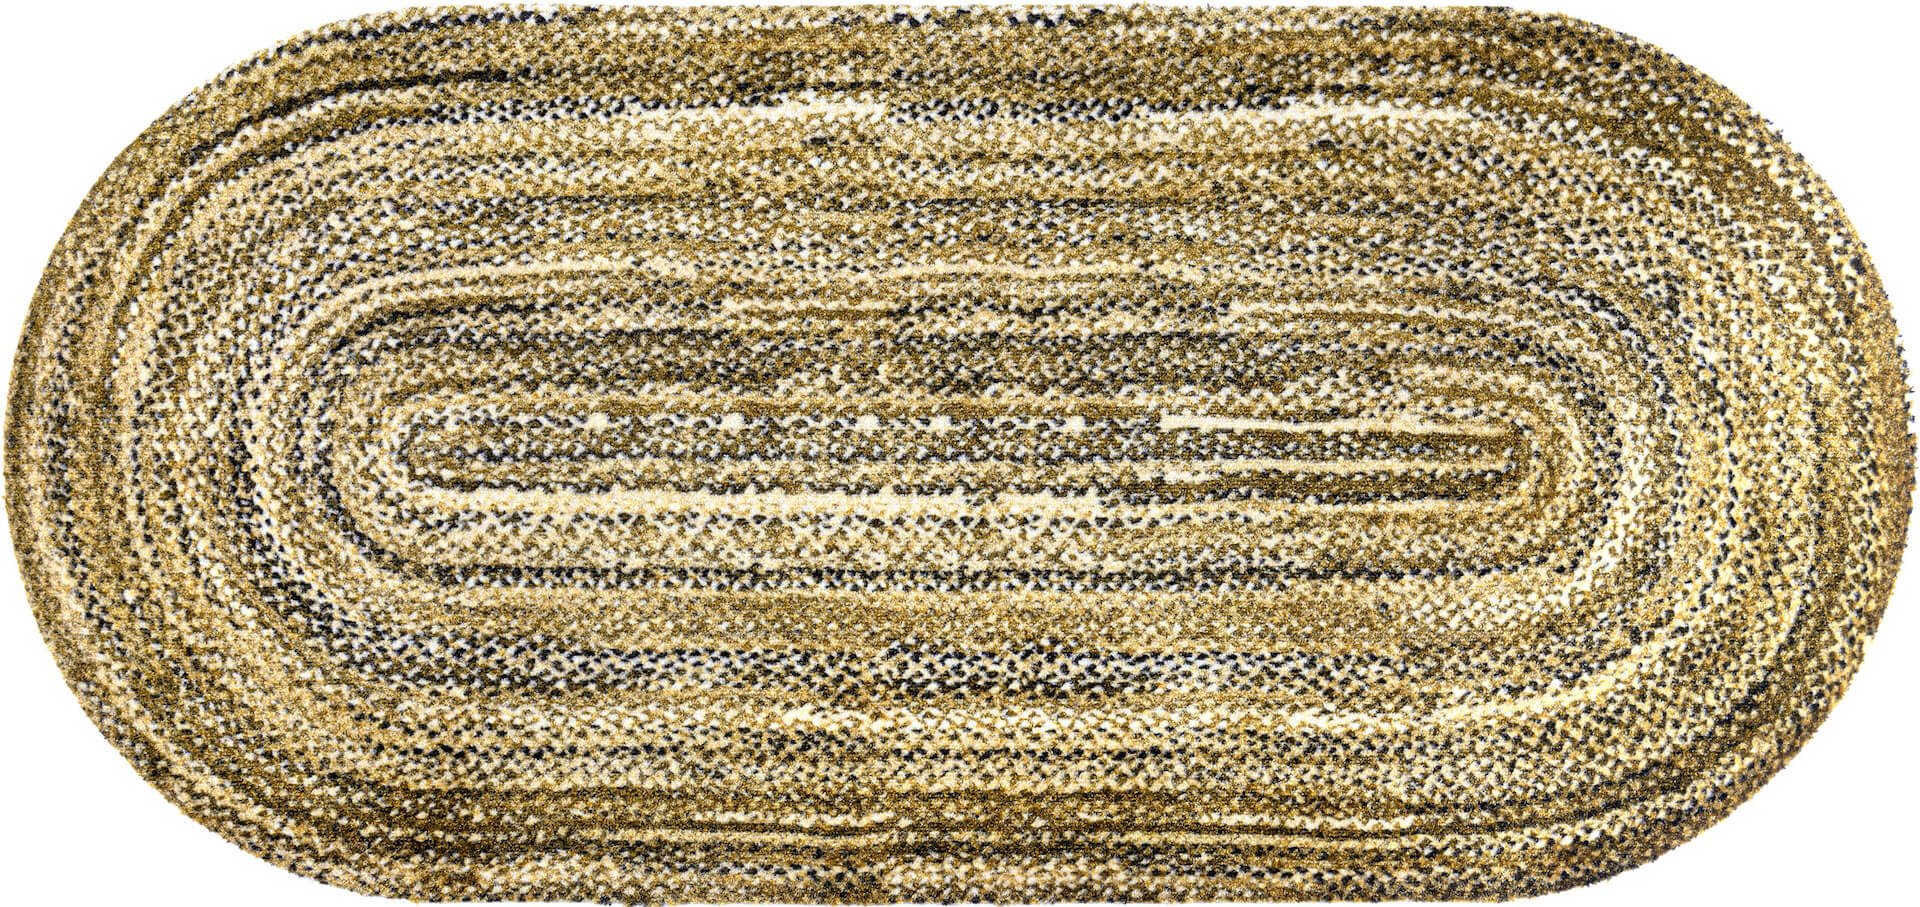 Randlose Fußmatte Wovells grain, wash & dry, 070 x 150 cm, Draufsicht